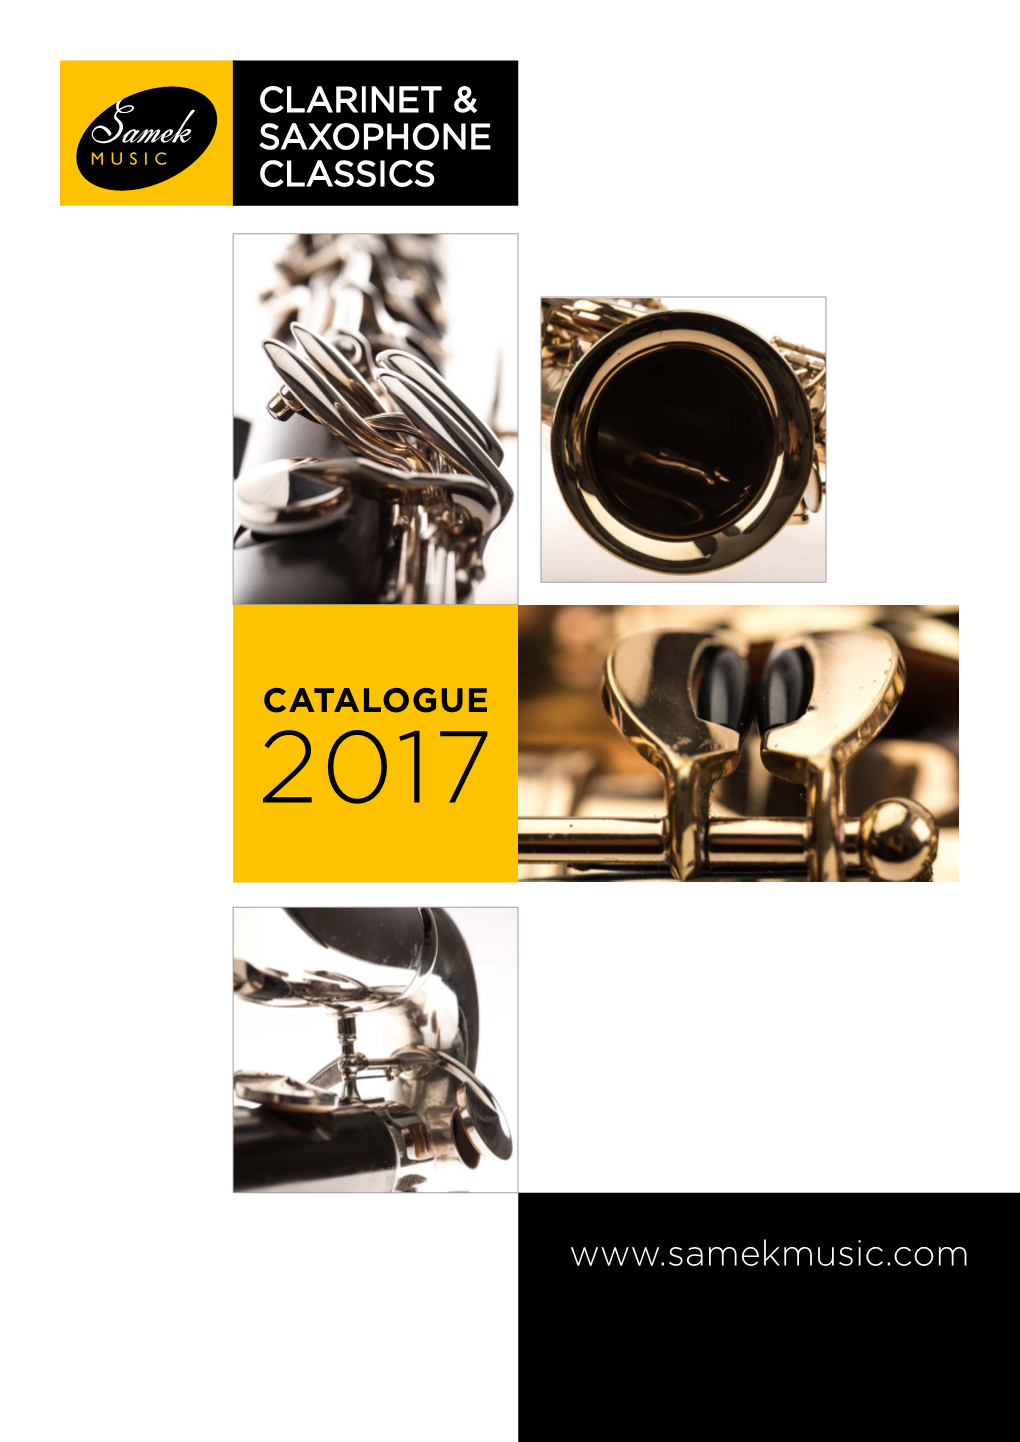 Download the Clarinet Saxophone Classics Catalogue